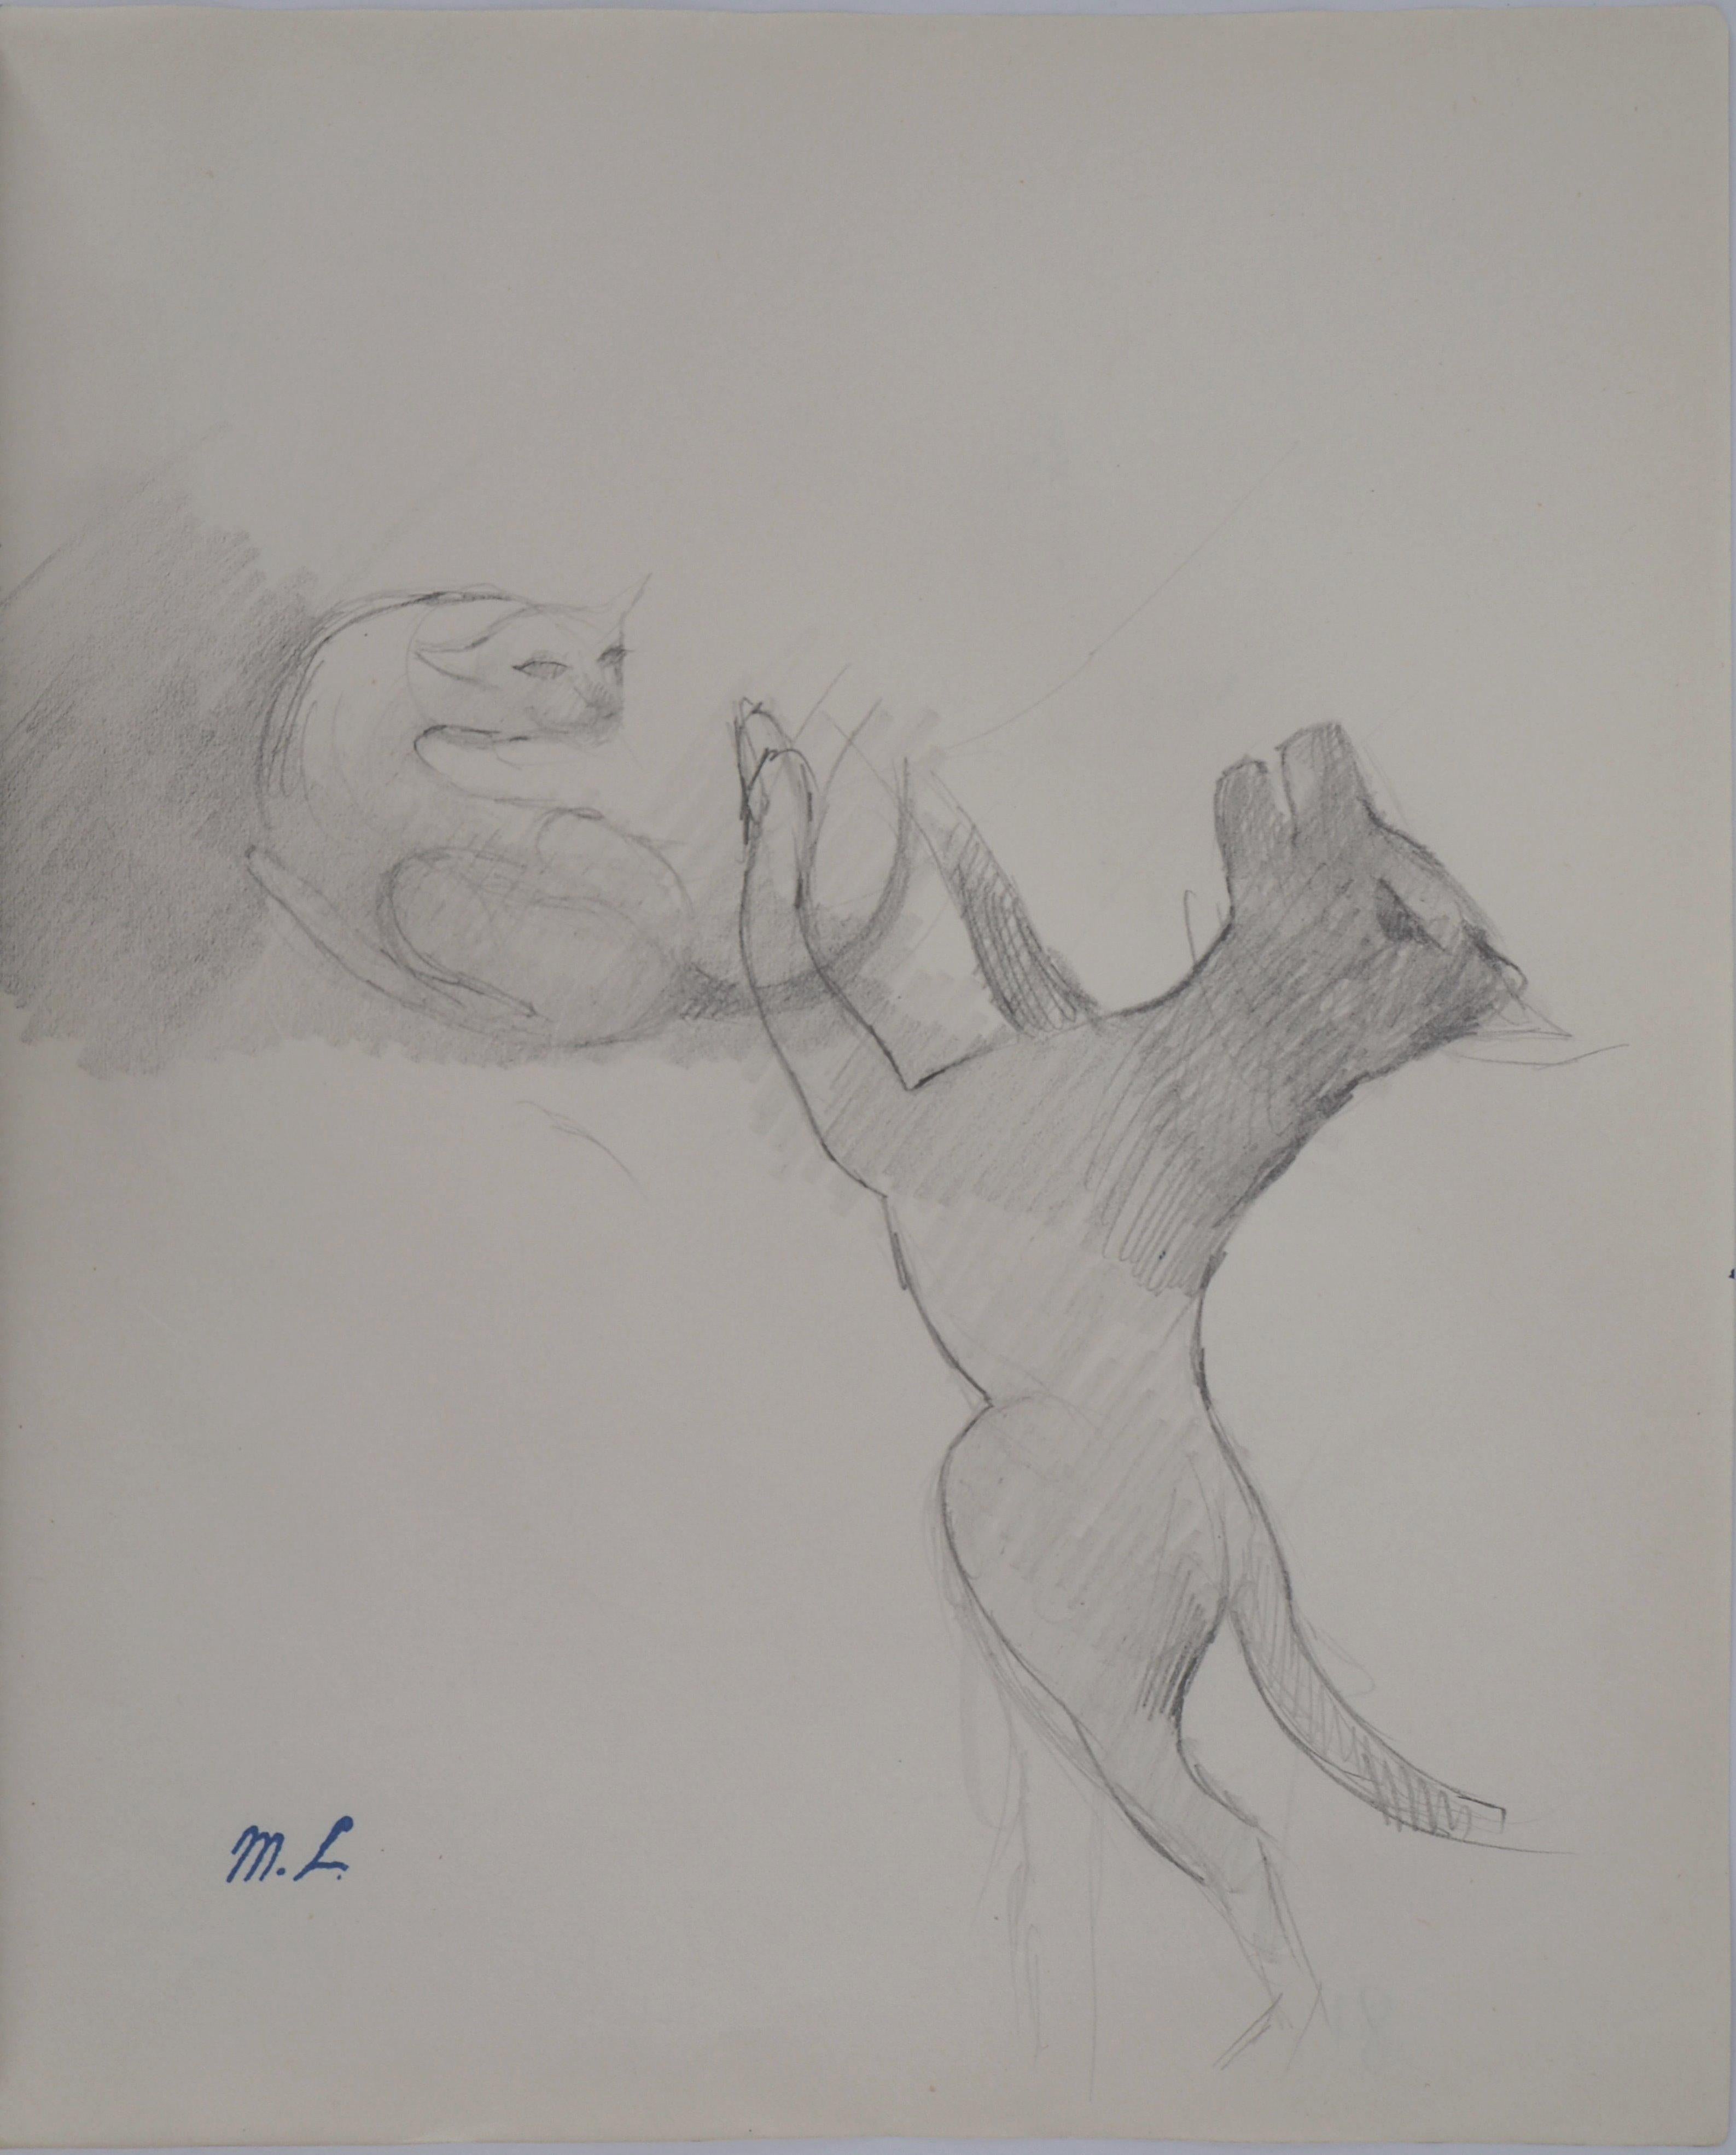 Marie Laurencin Animal Art - Cat and Dog Playing - Original pencil drawing, 1953